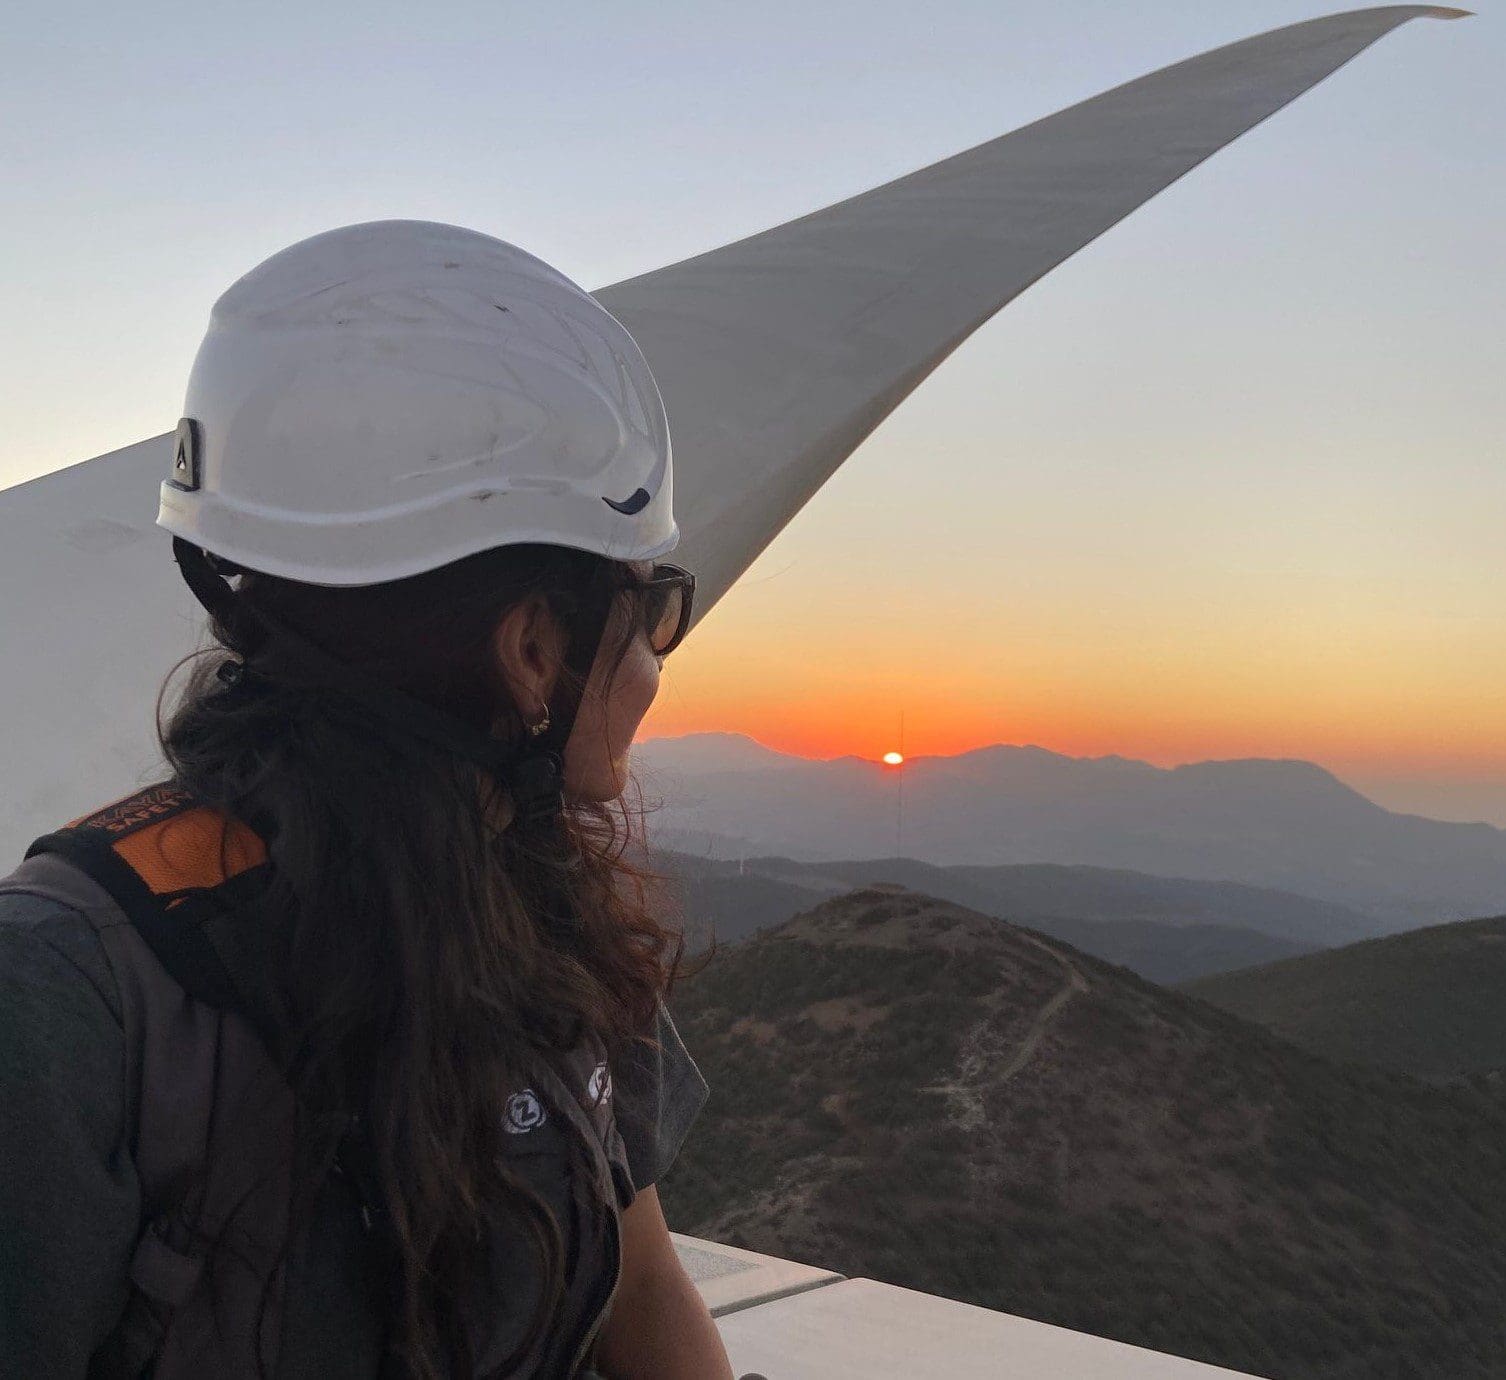 Songul Ogdum on wind turbine with sunset